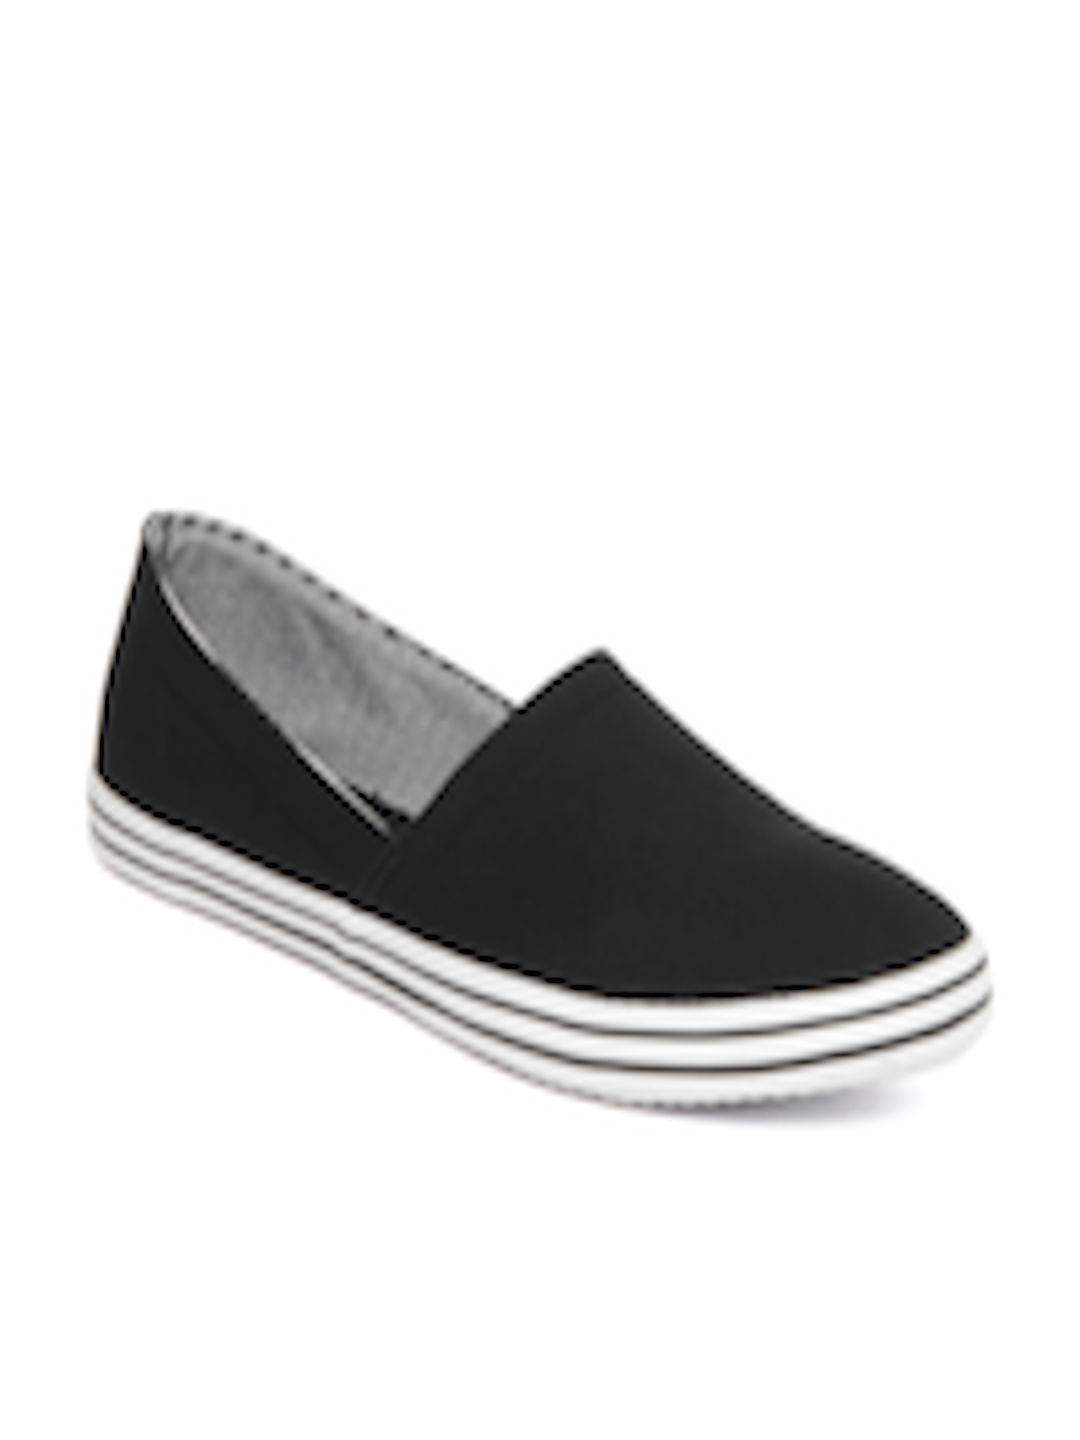 Buy Mast & Harbour Men Black Casual Shoes - Casual Shoes for Men 326751 ...